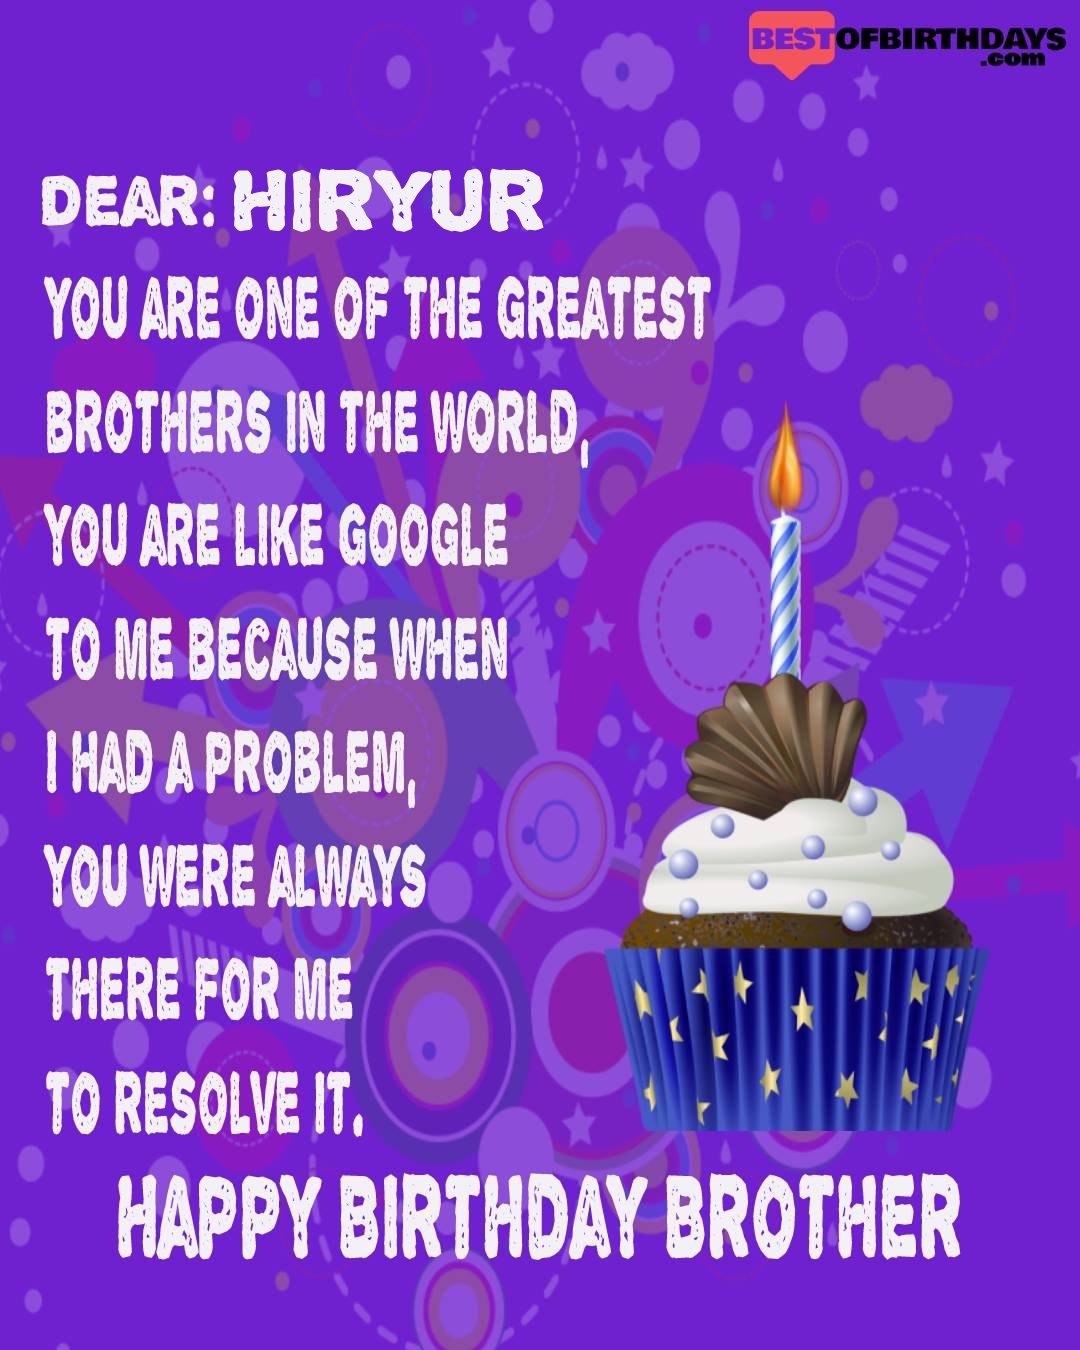 Happy birthday hiryur bhai brother bro